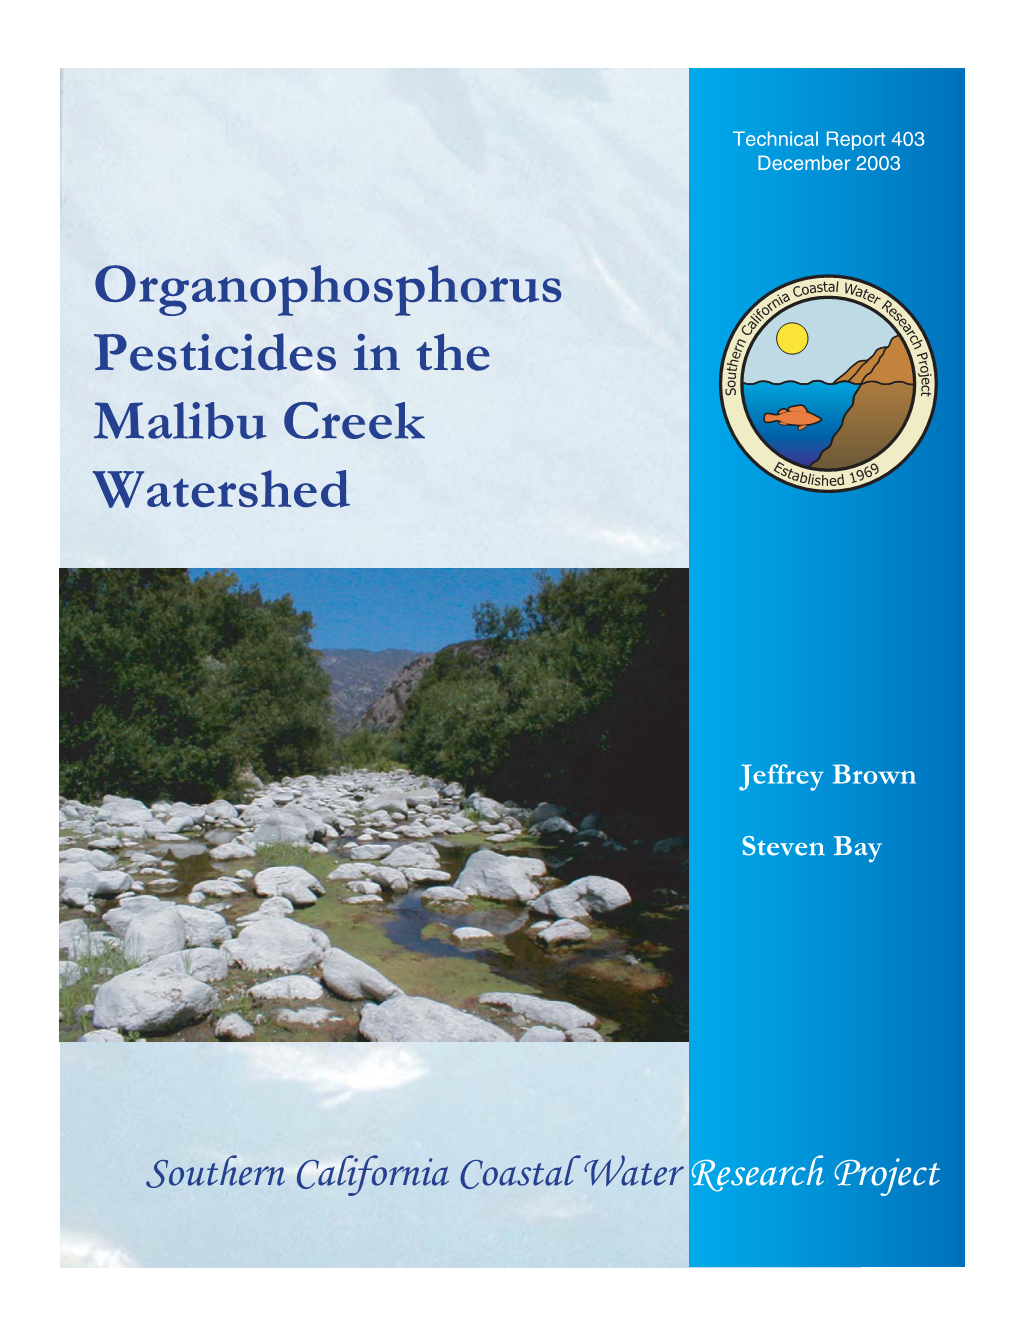 Organophosphorus Pesticides in the Malibu Creek Watershed